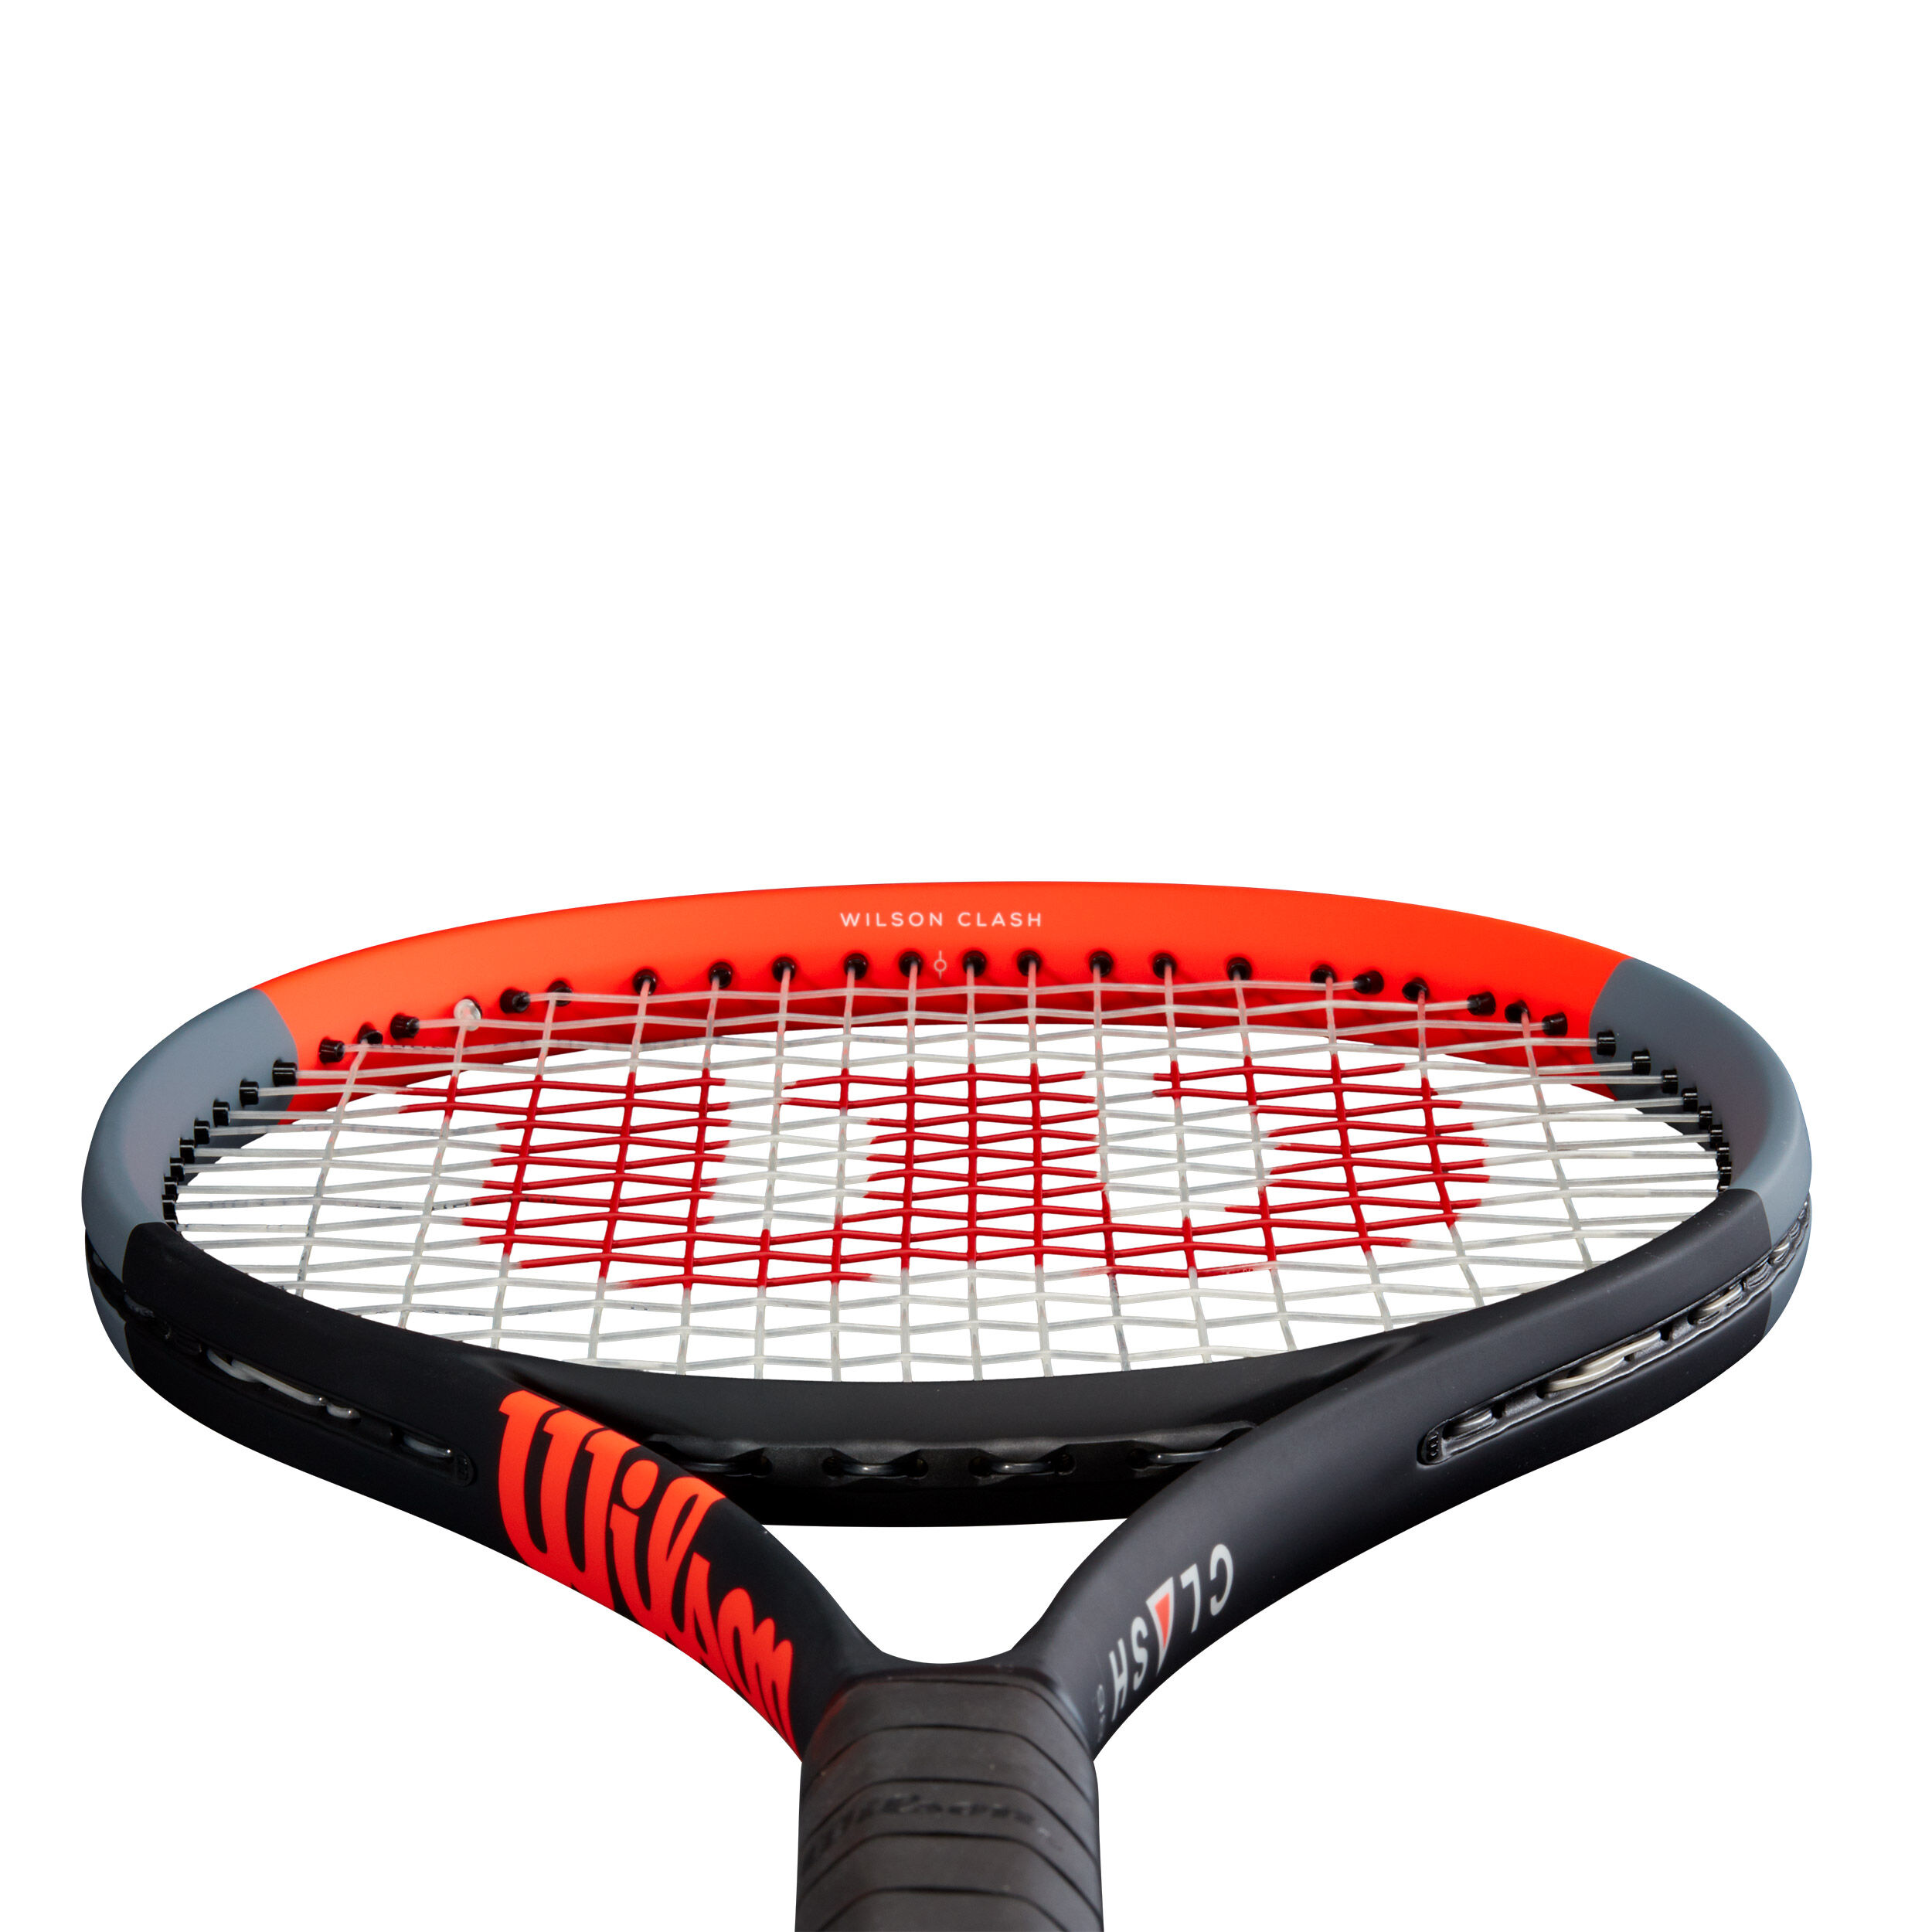 Tennis Racket 10.9 oz 310g 16x19 pro tour flex Wilson Clash 98 STRUNG 4 3/8 